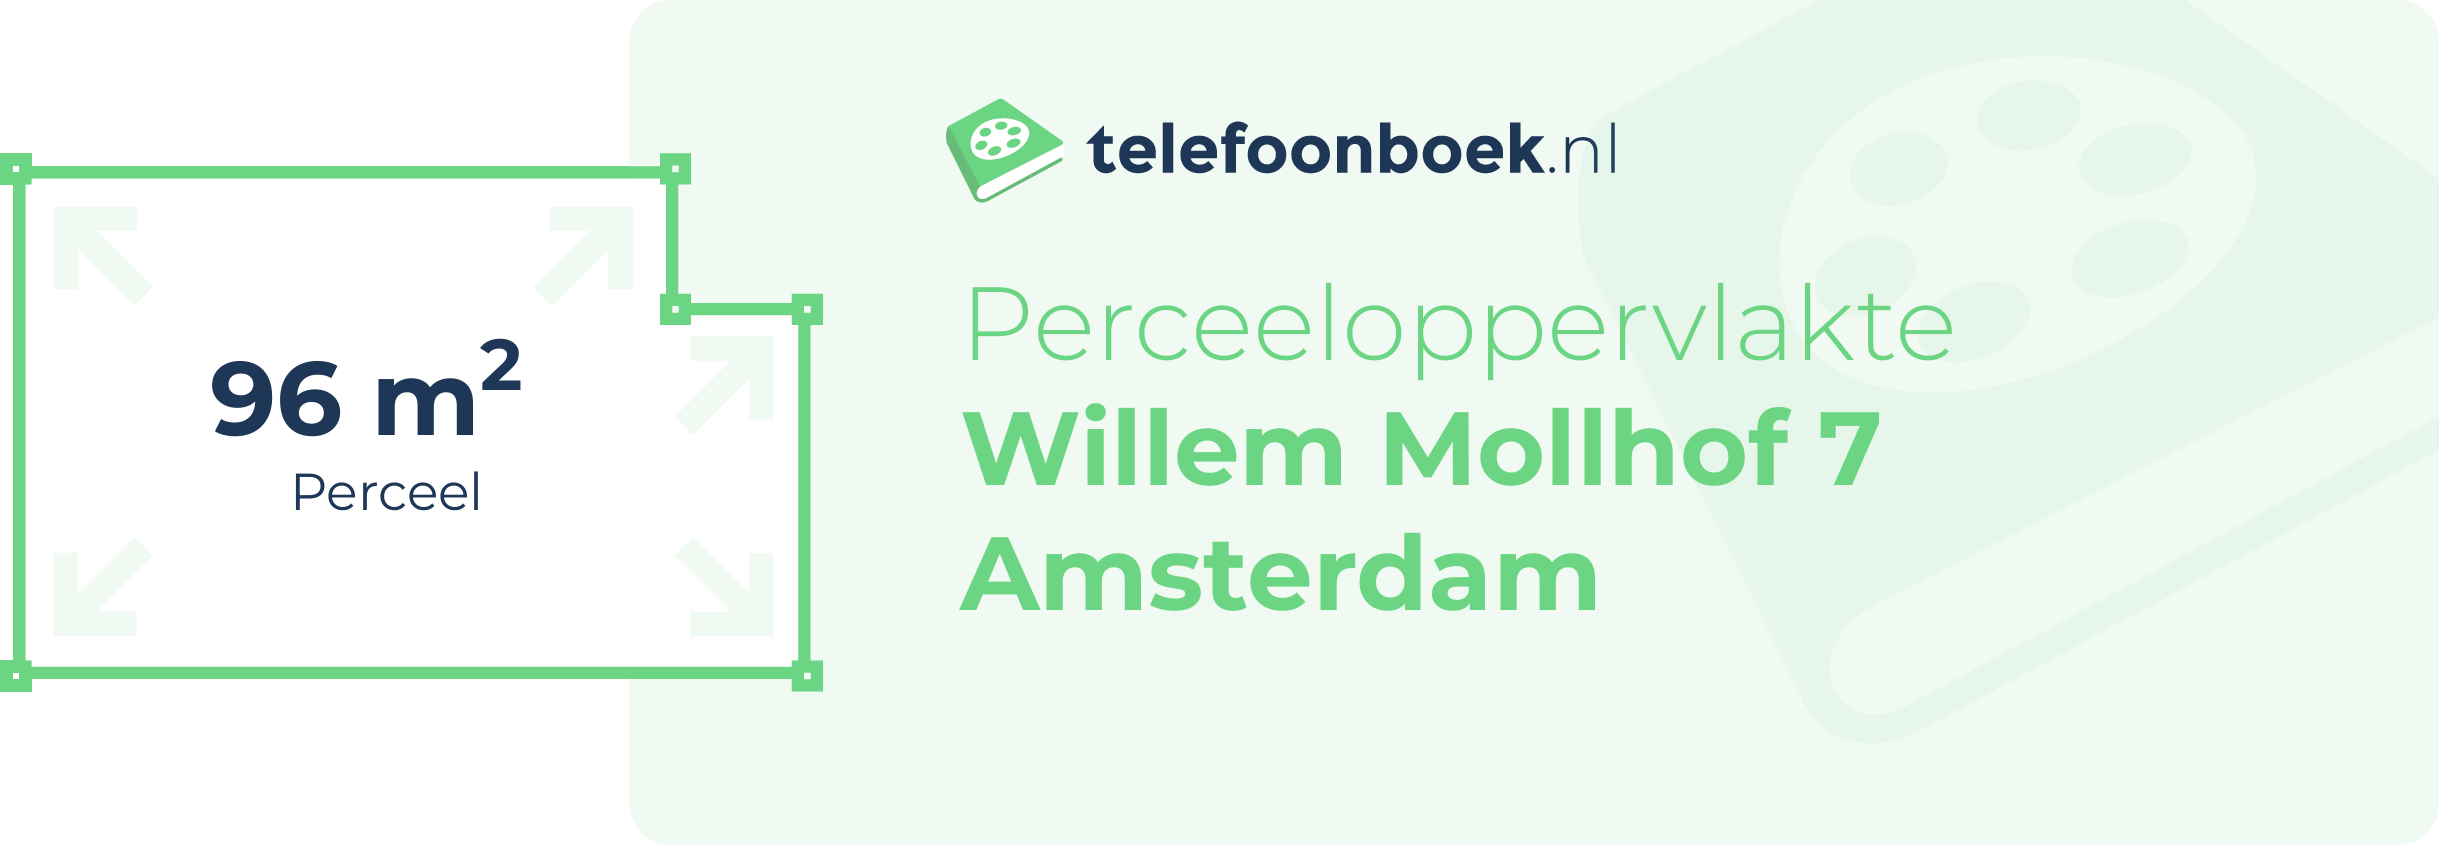 Perceeloppervlakte Willem Mollhof 7 Amsterdam